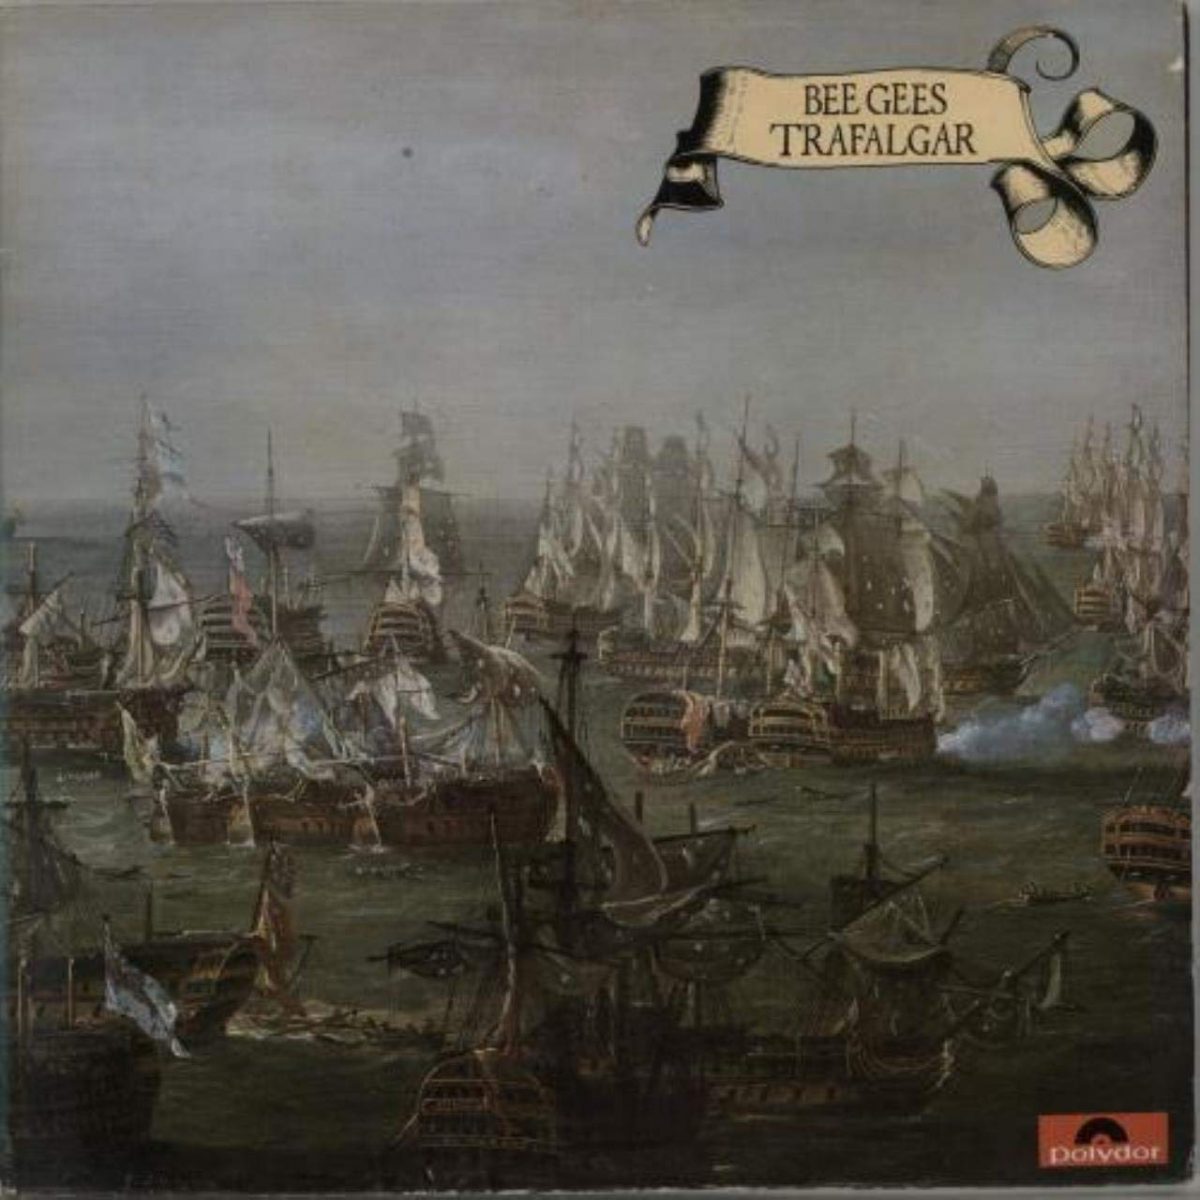 Bee Gees - Trafalgar (album cover)